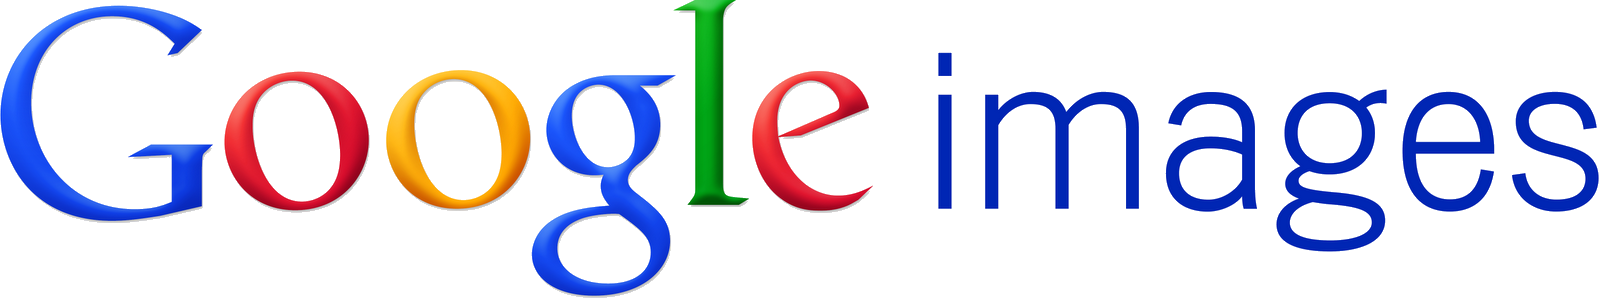 clip art google logo - photo #20